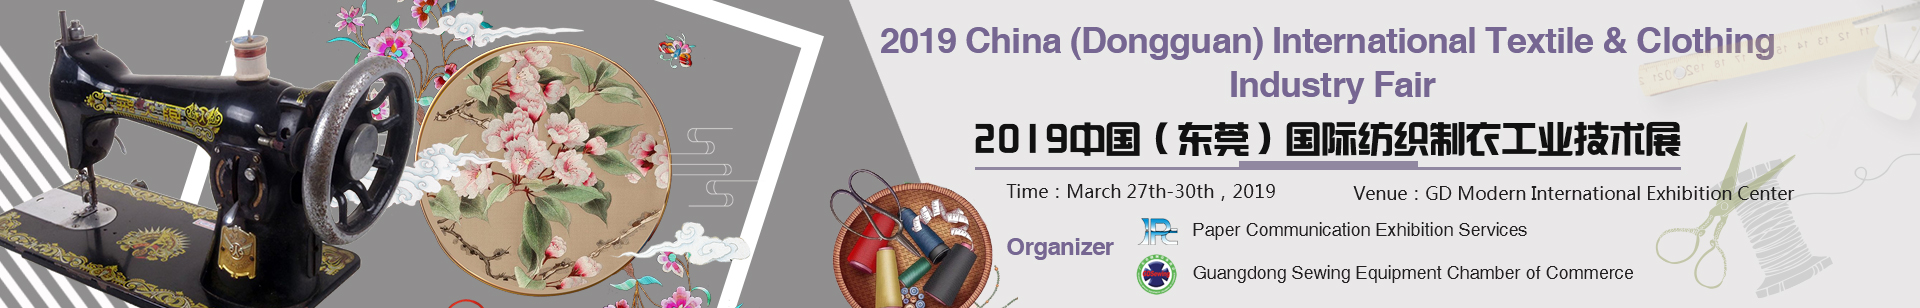 China (Dongguan) Int‘l Textile & Clothing Industry Fair